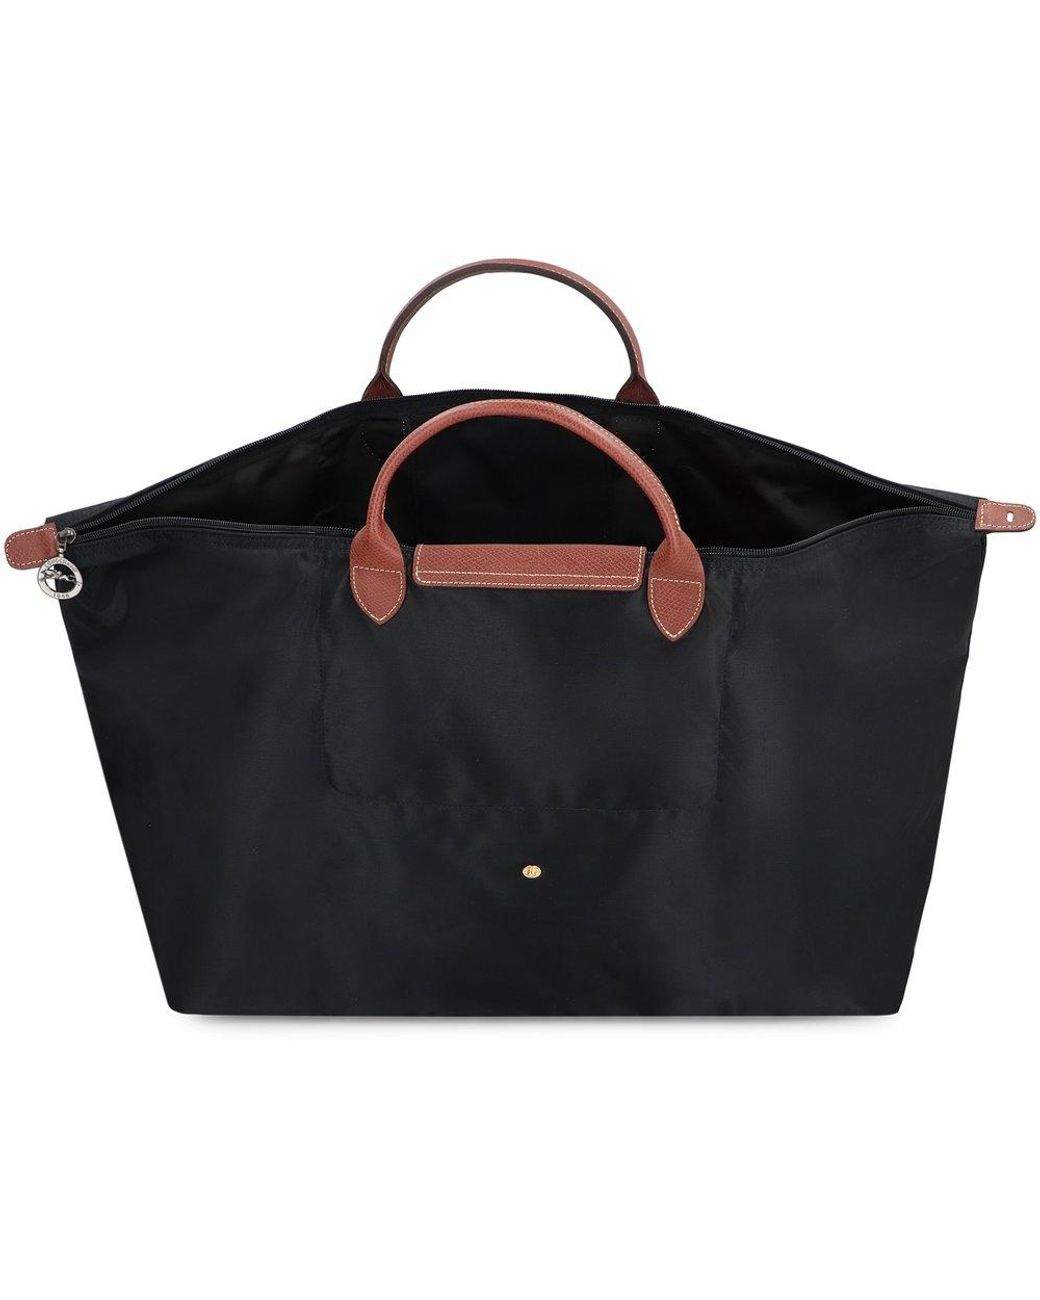 Longchamp Le Pliage Xl Travel Bag in Black | Lyst